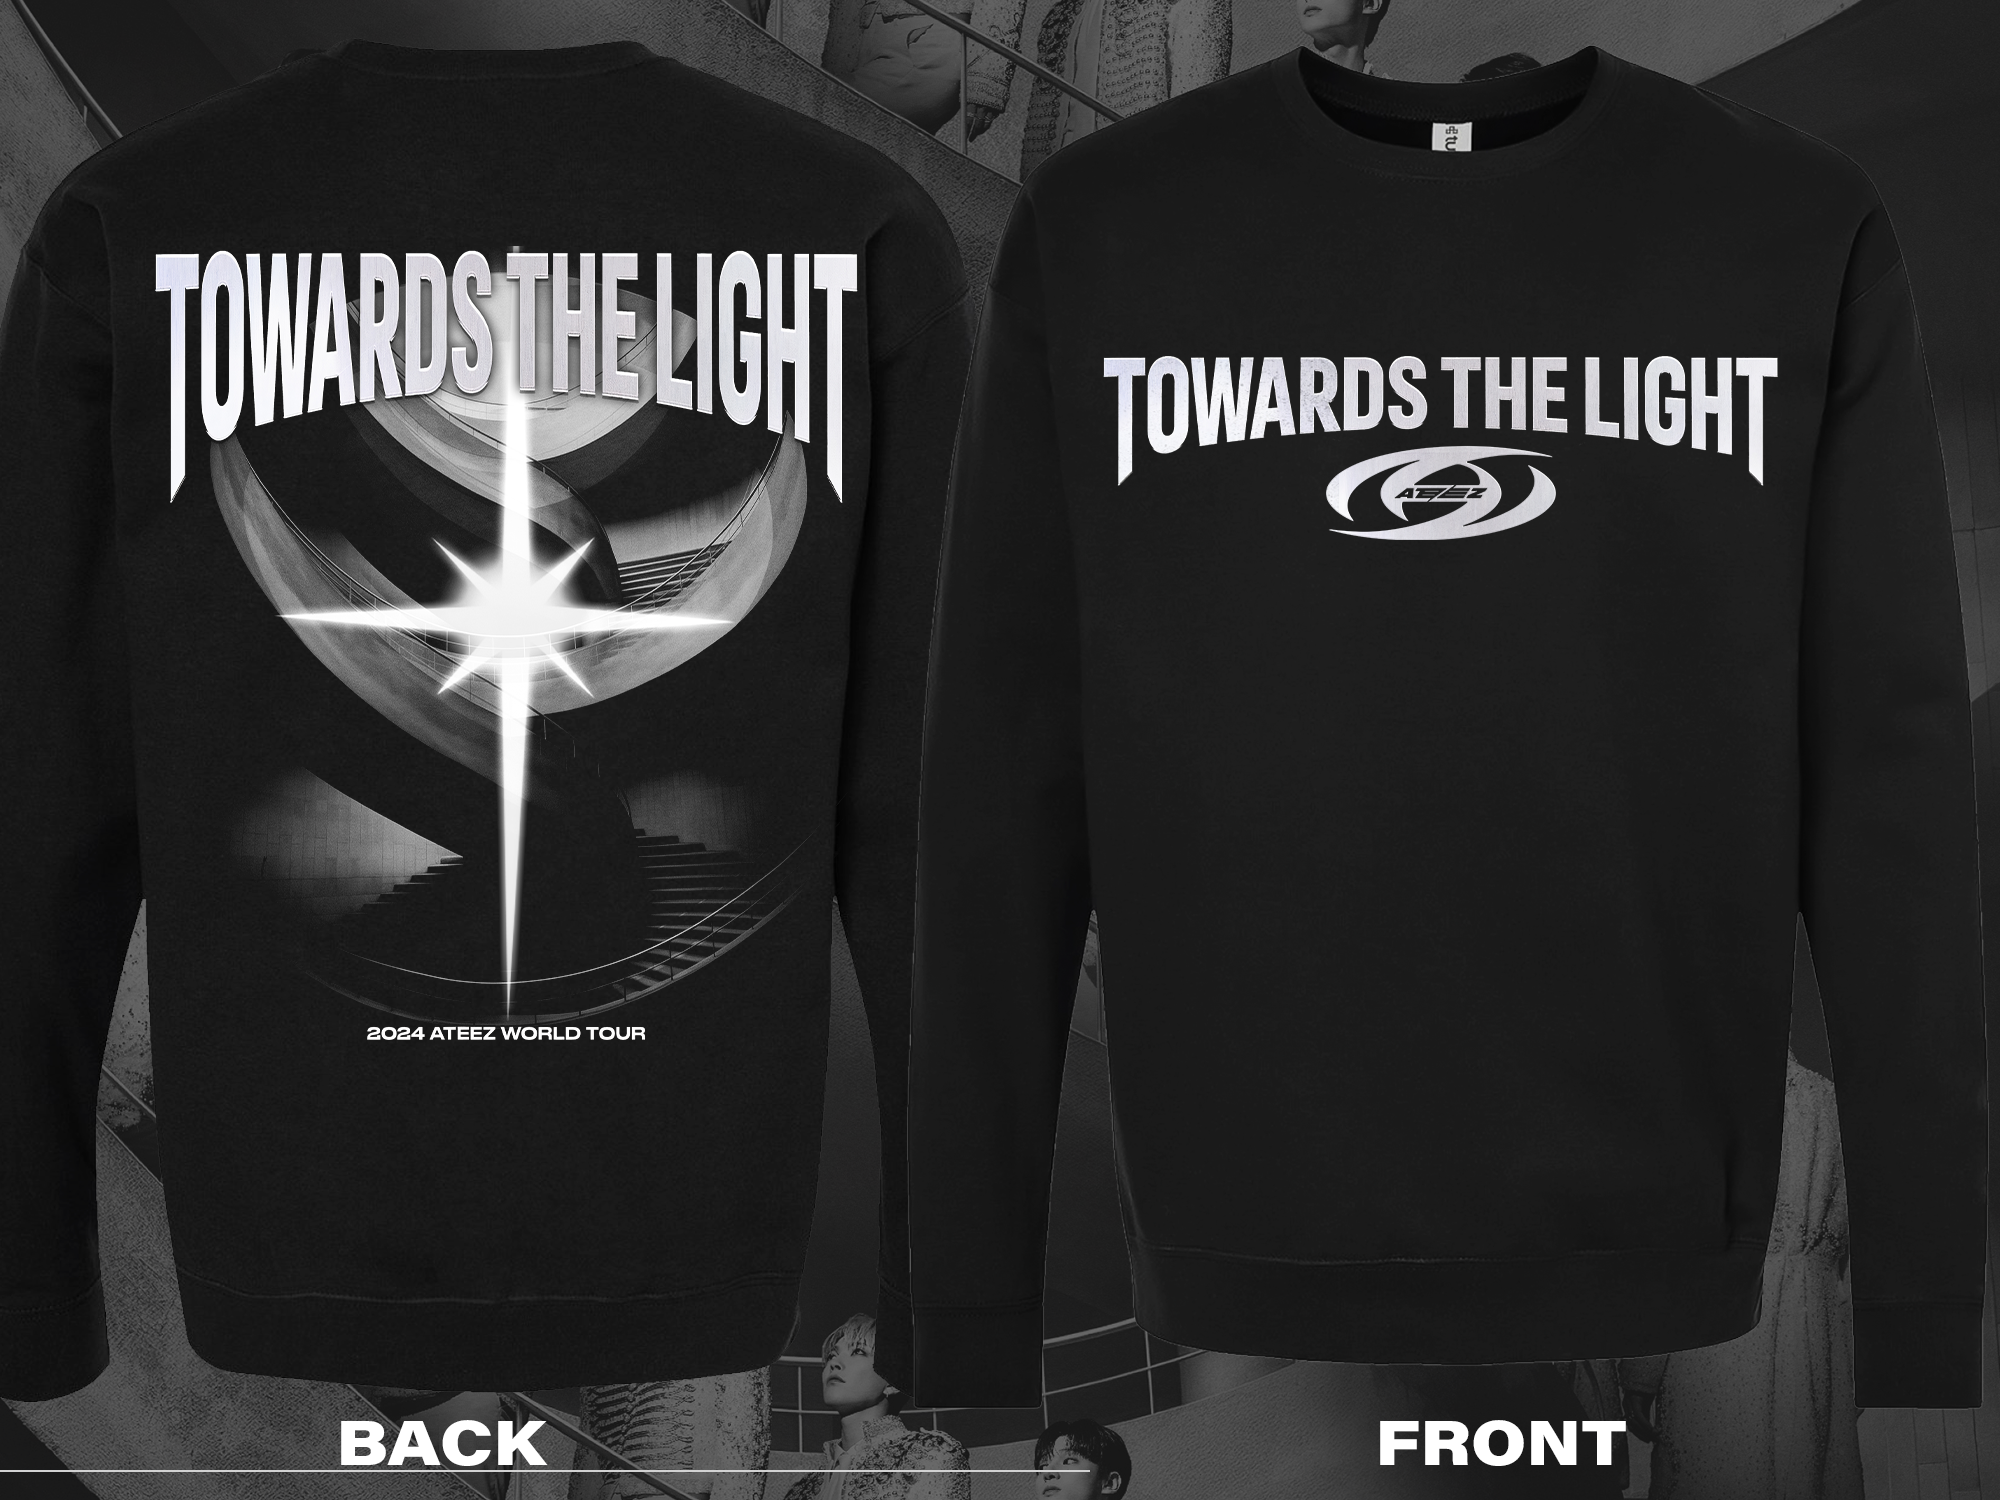 Ateez Towards the Light Tour Shirts and Sweatshirts